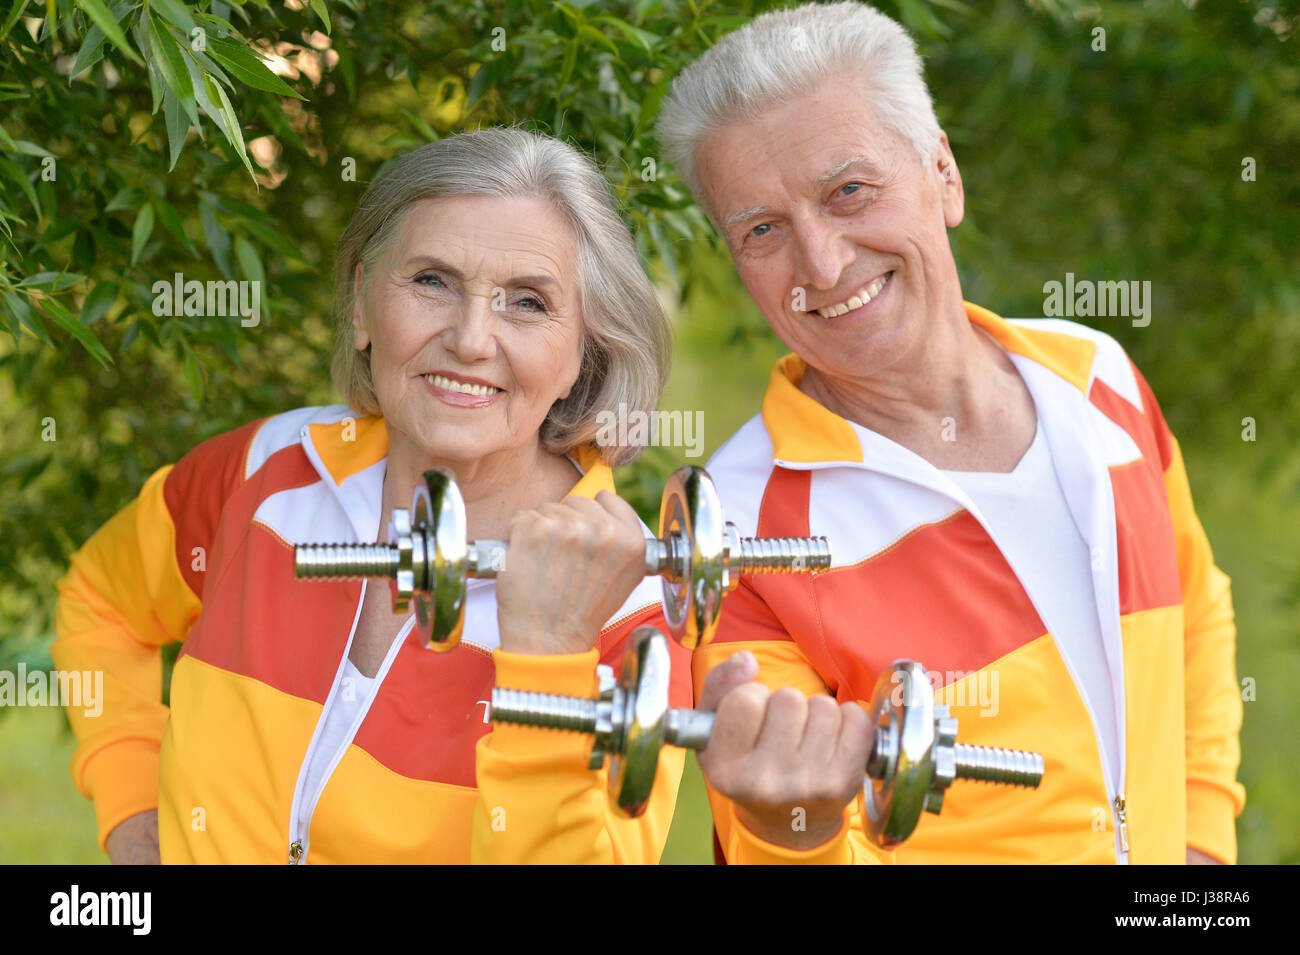 Beautiful elderly couple with dumbbells Stock Photo